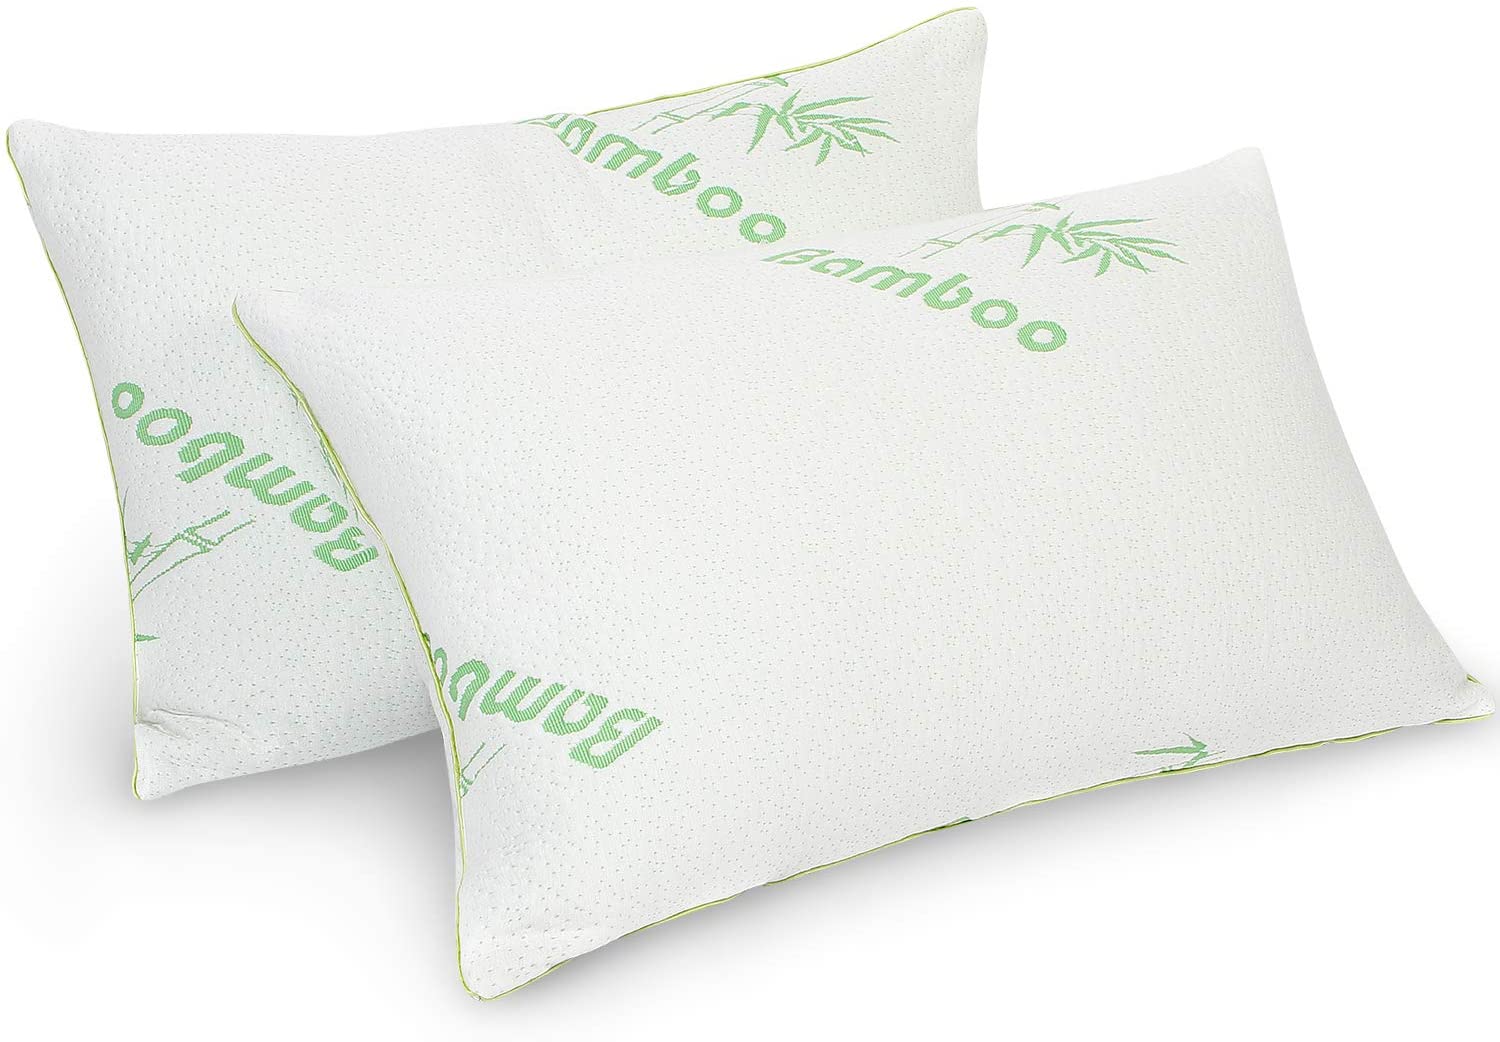 ComforTime Bamboo Pillows for Sleeping